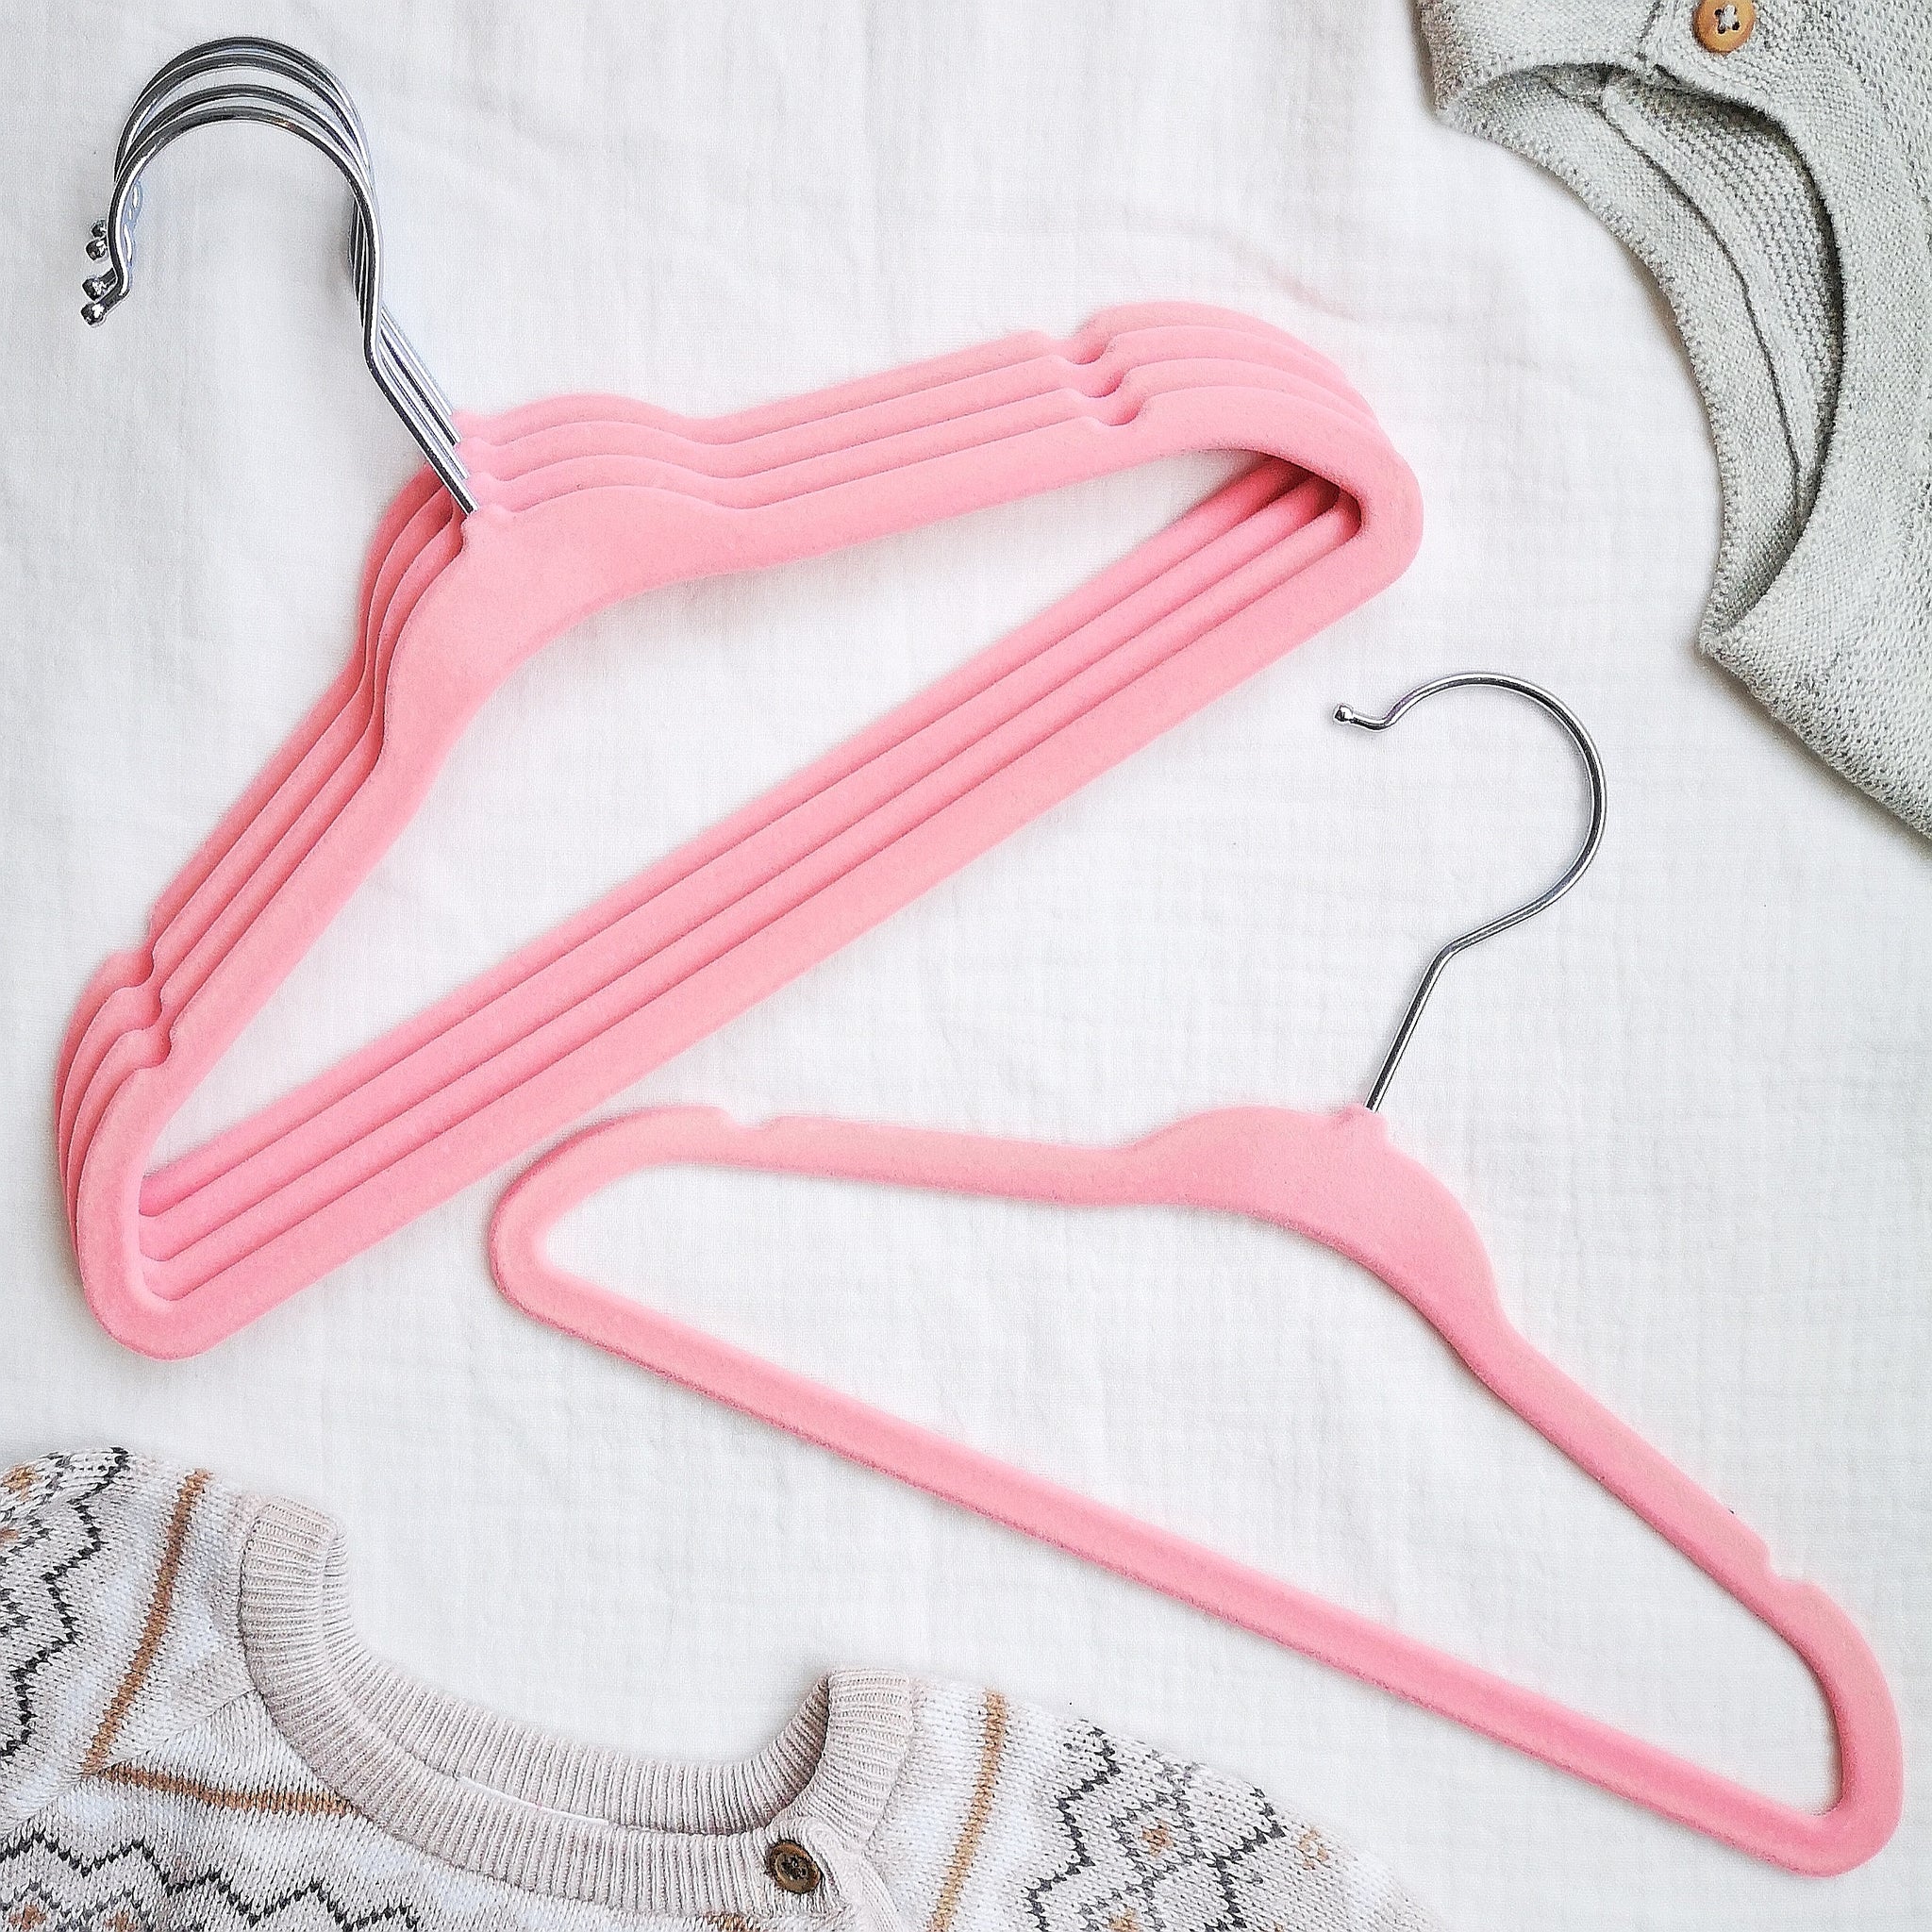 Velvet Baby Clothes Hangers - Pink